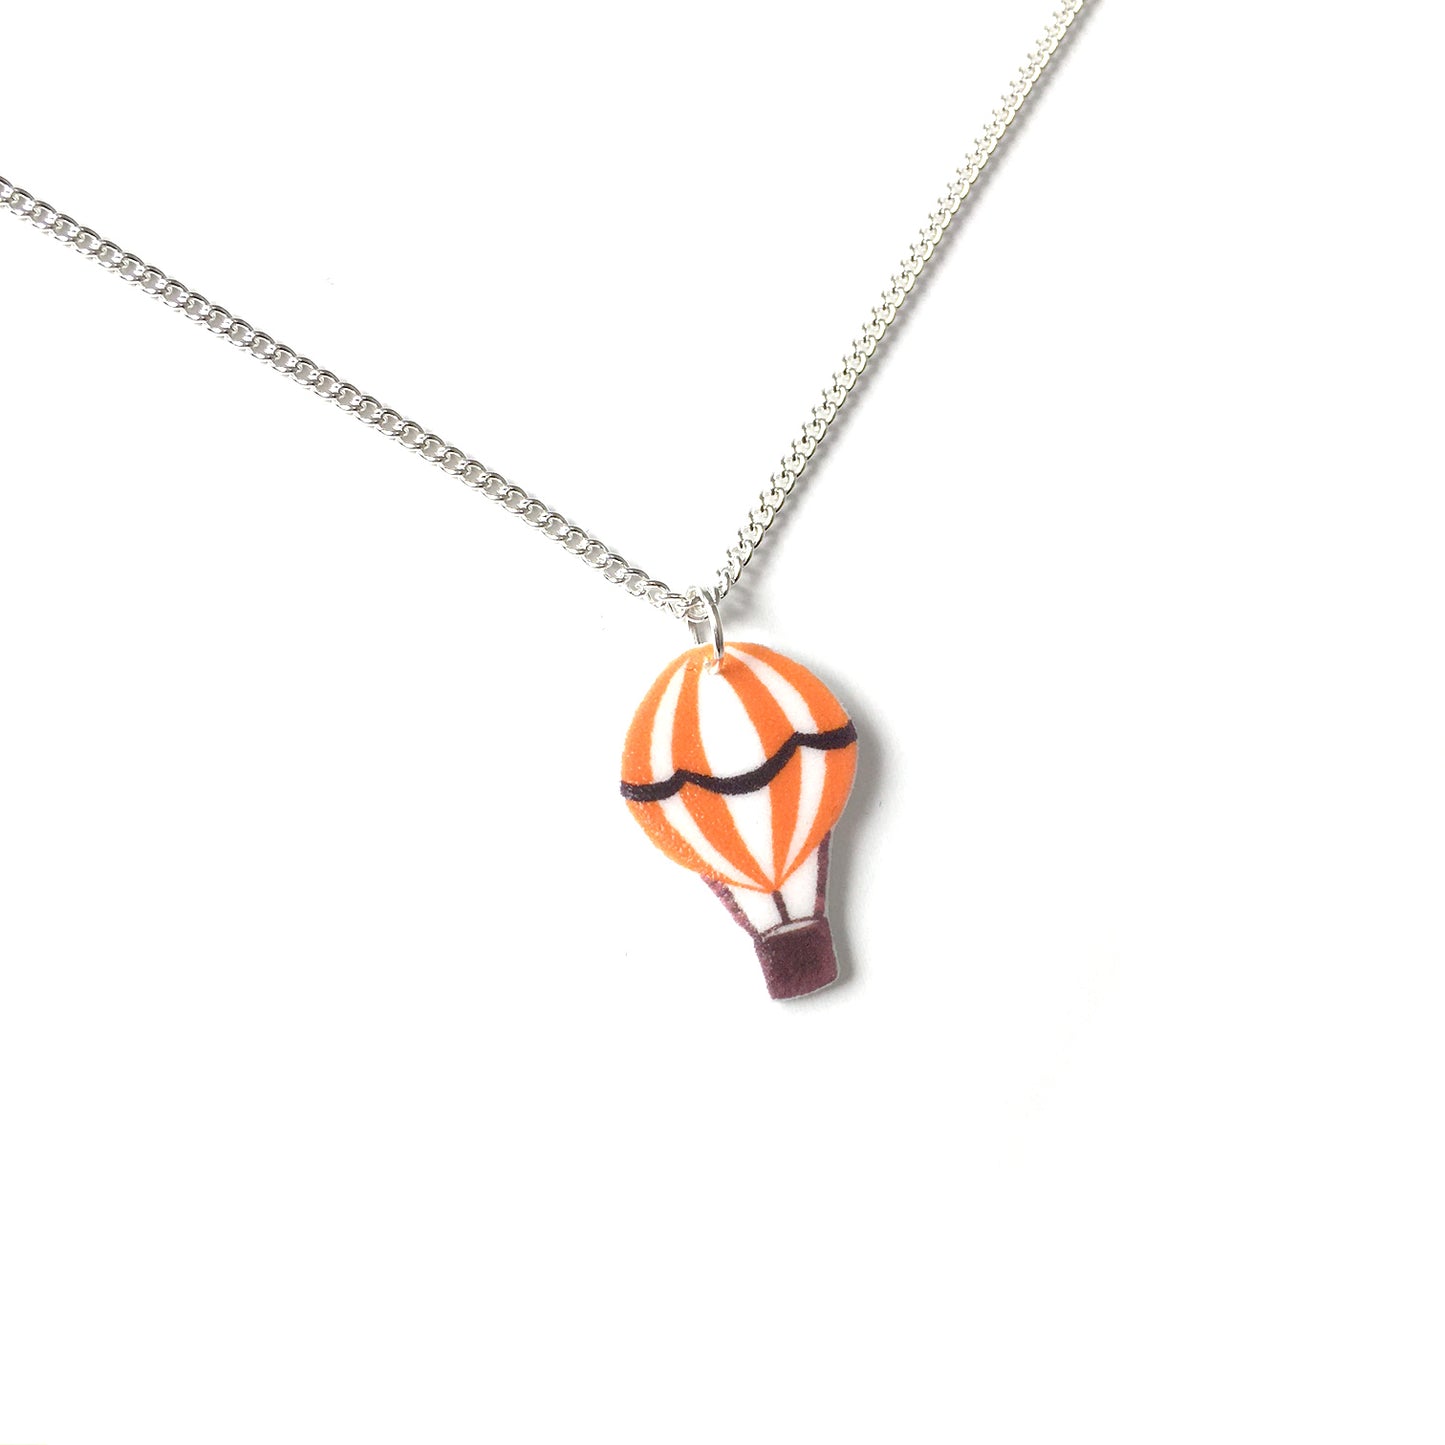 Orange hot air balloon pendant necklace